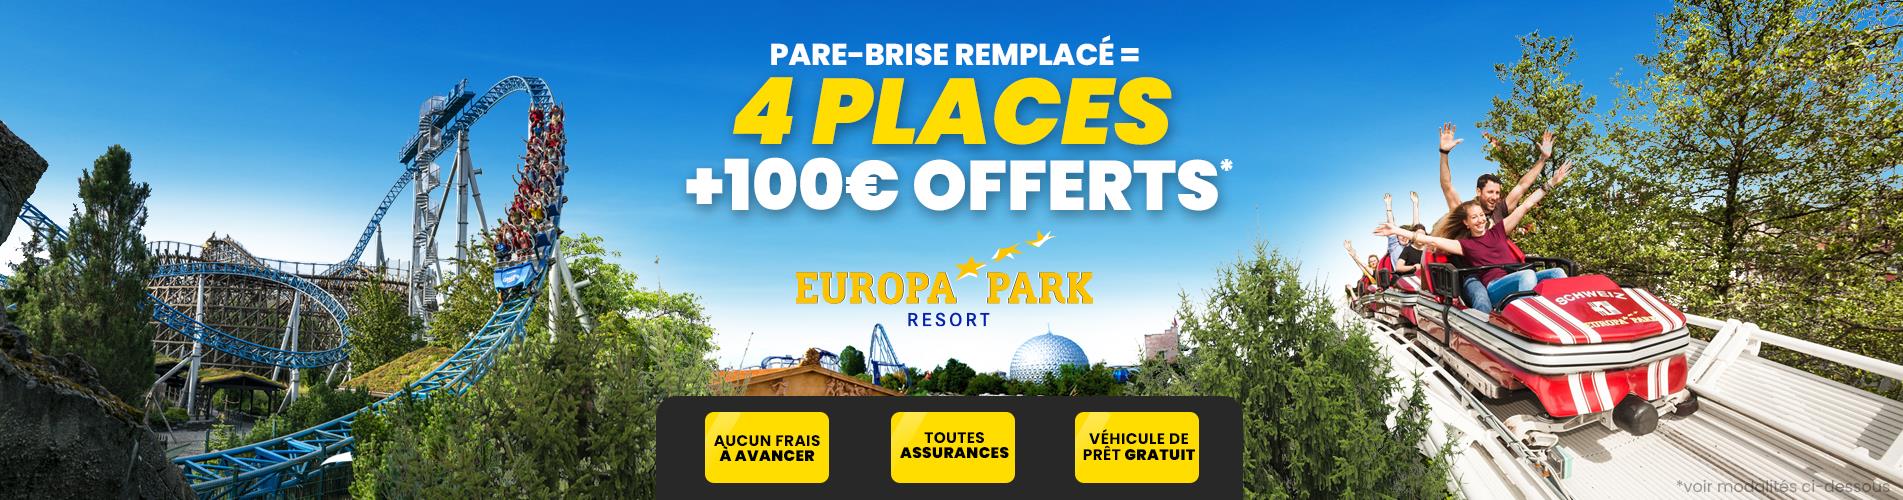 Offre Europa-Park